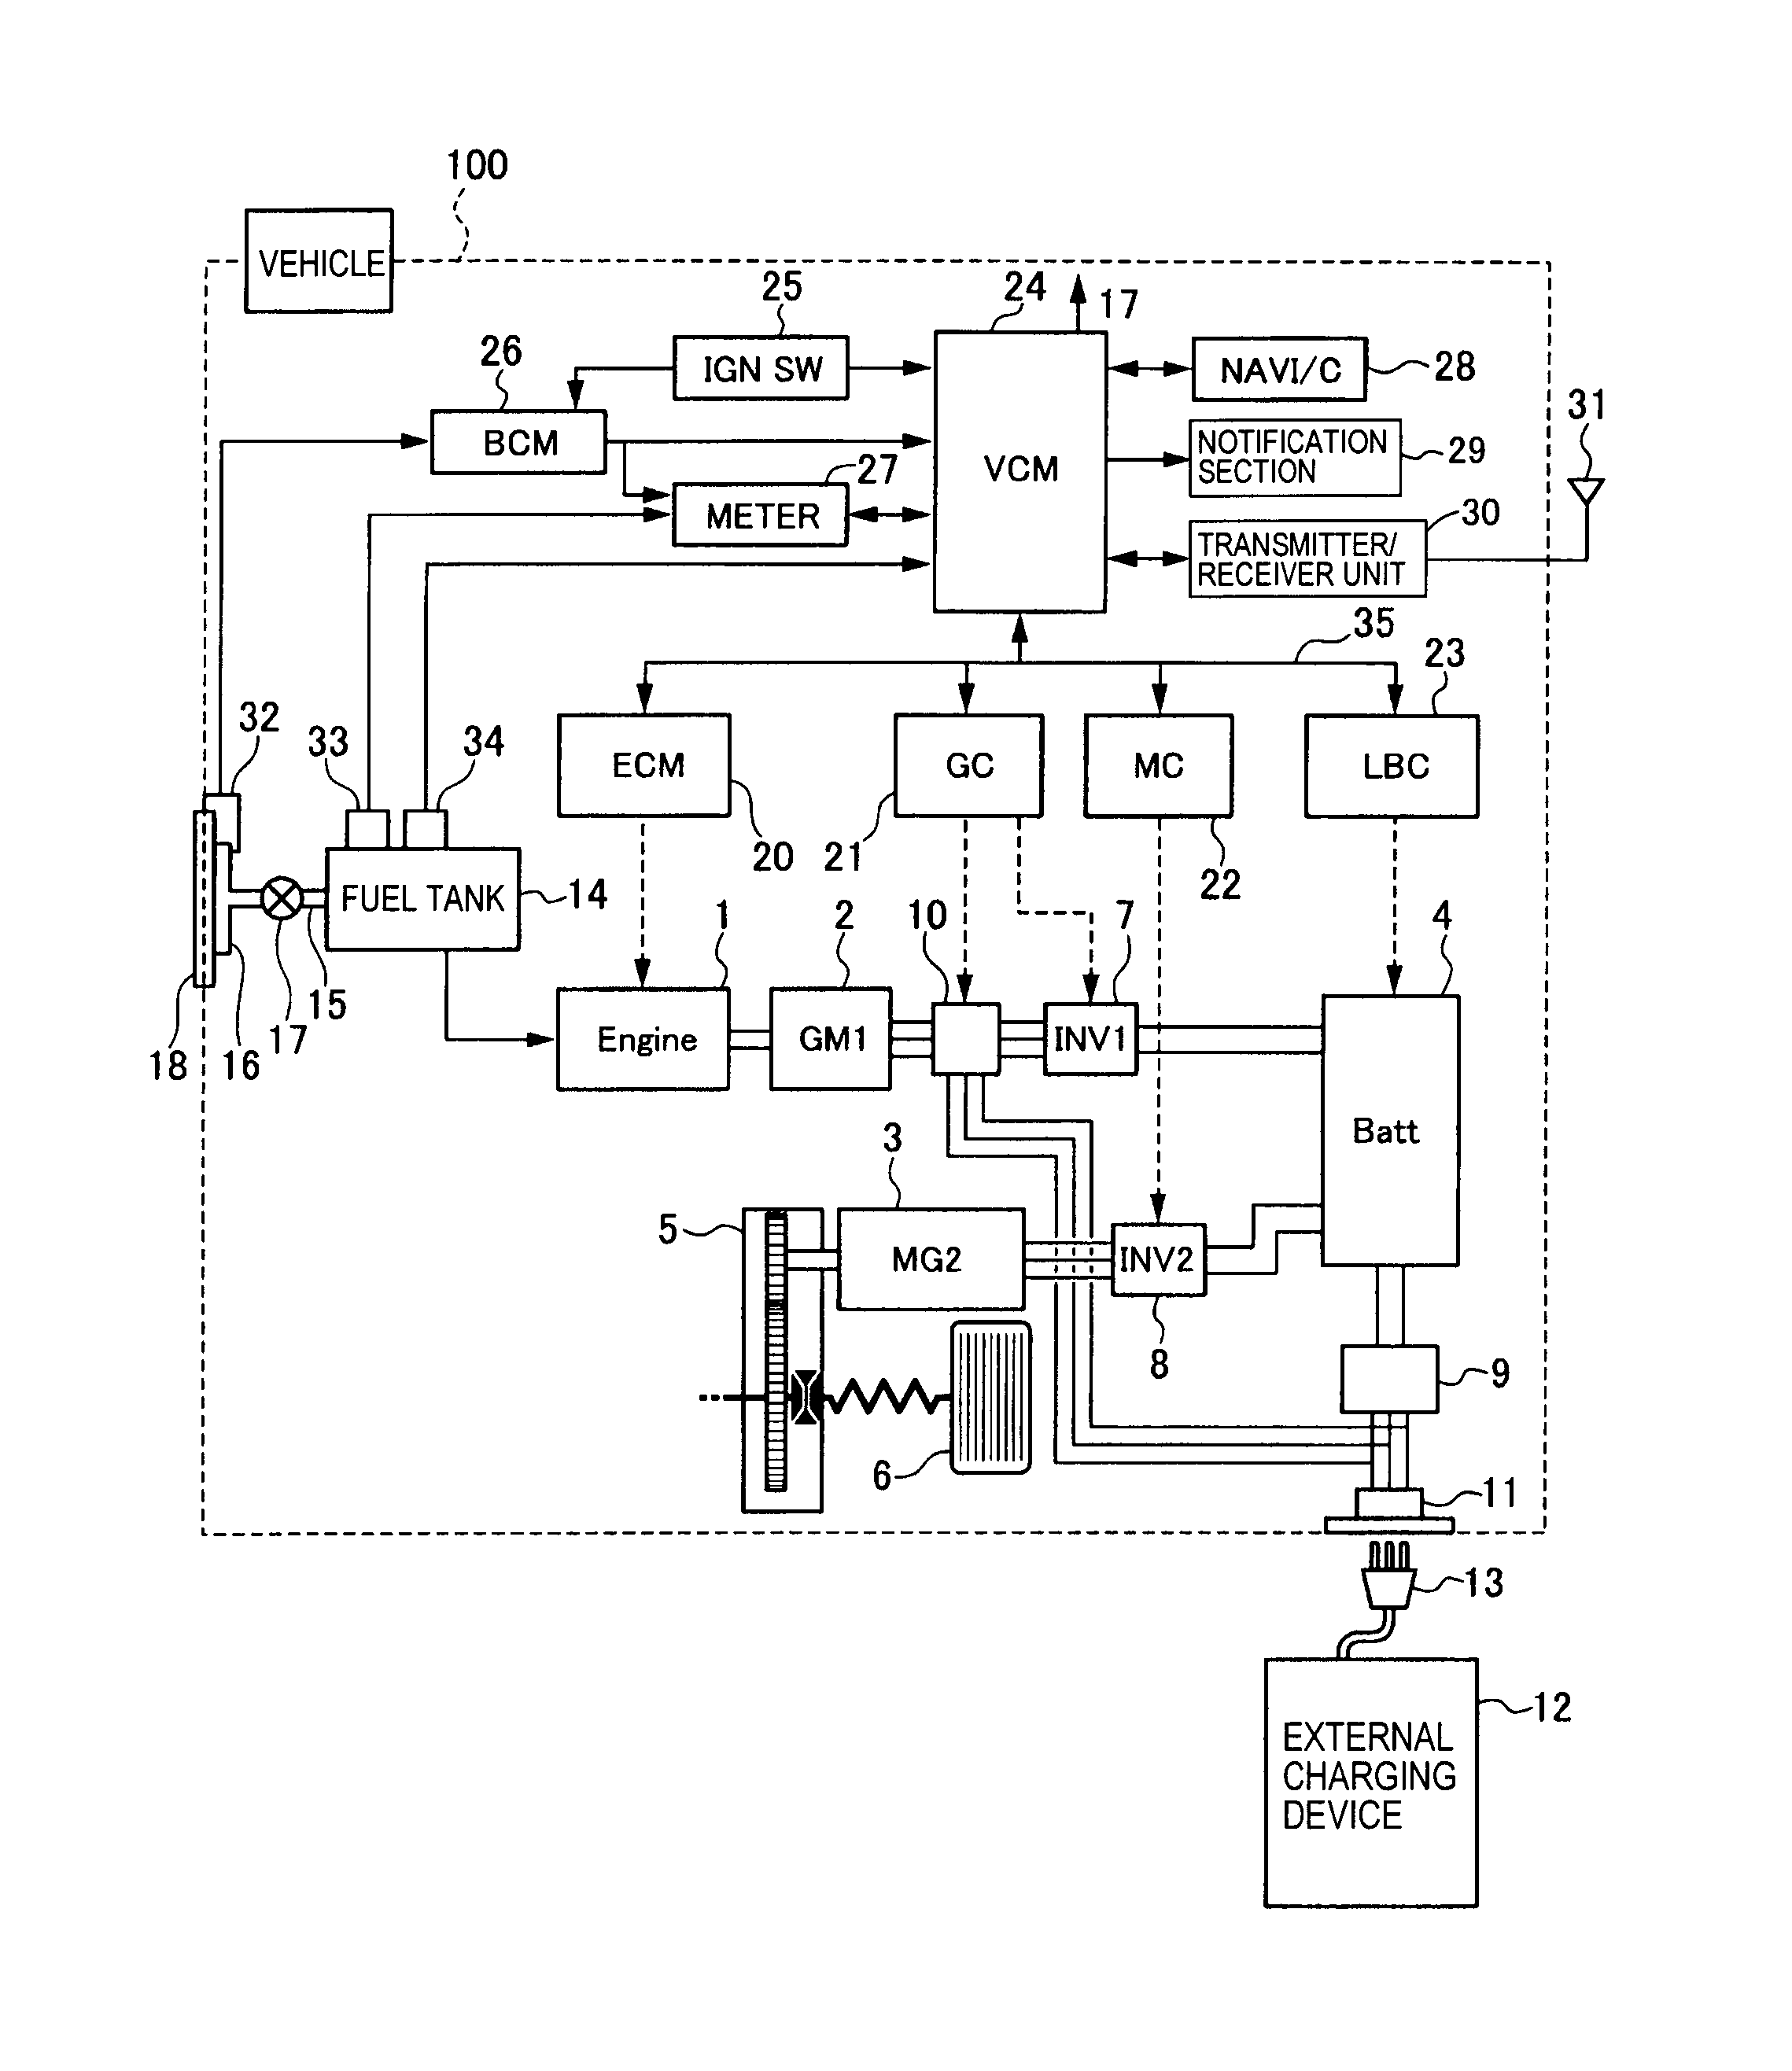 wiring diagram for 2001 dodge ram 1500 5.9 distributor